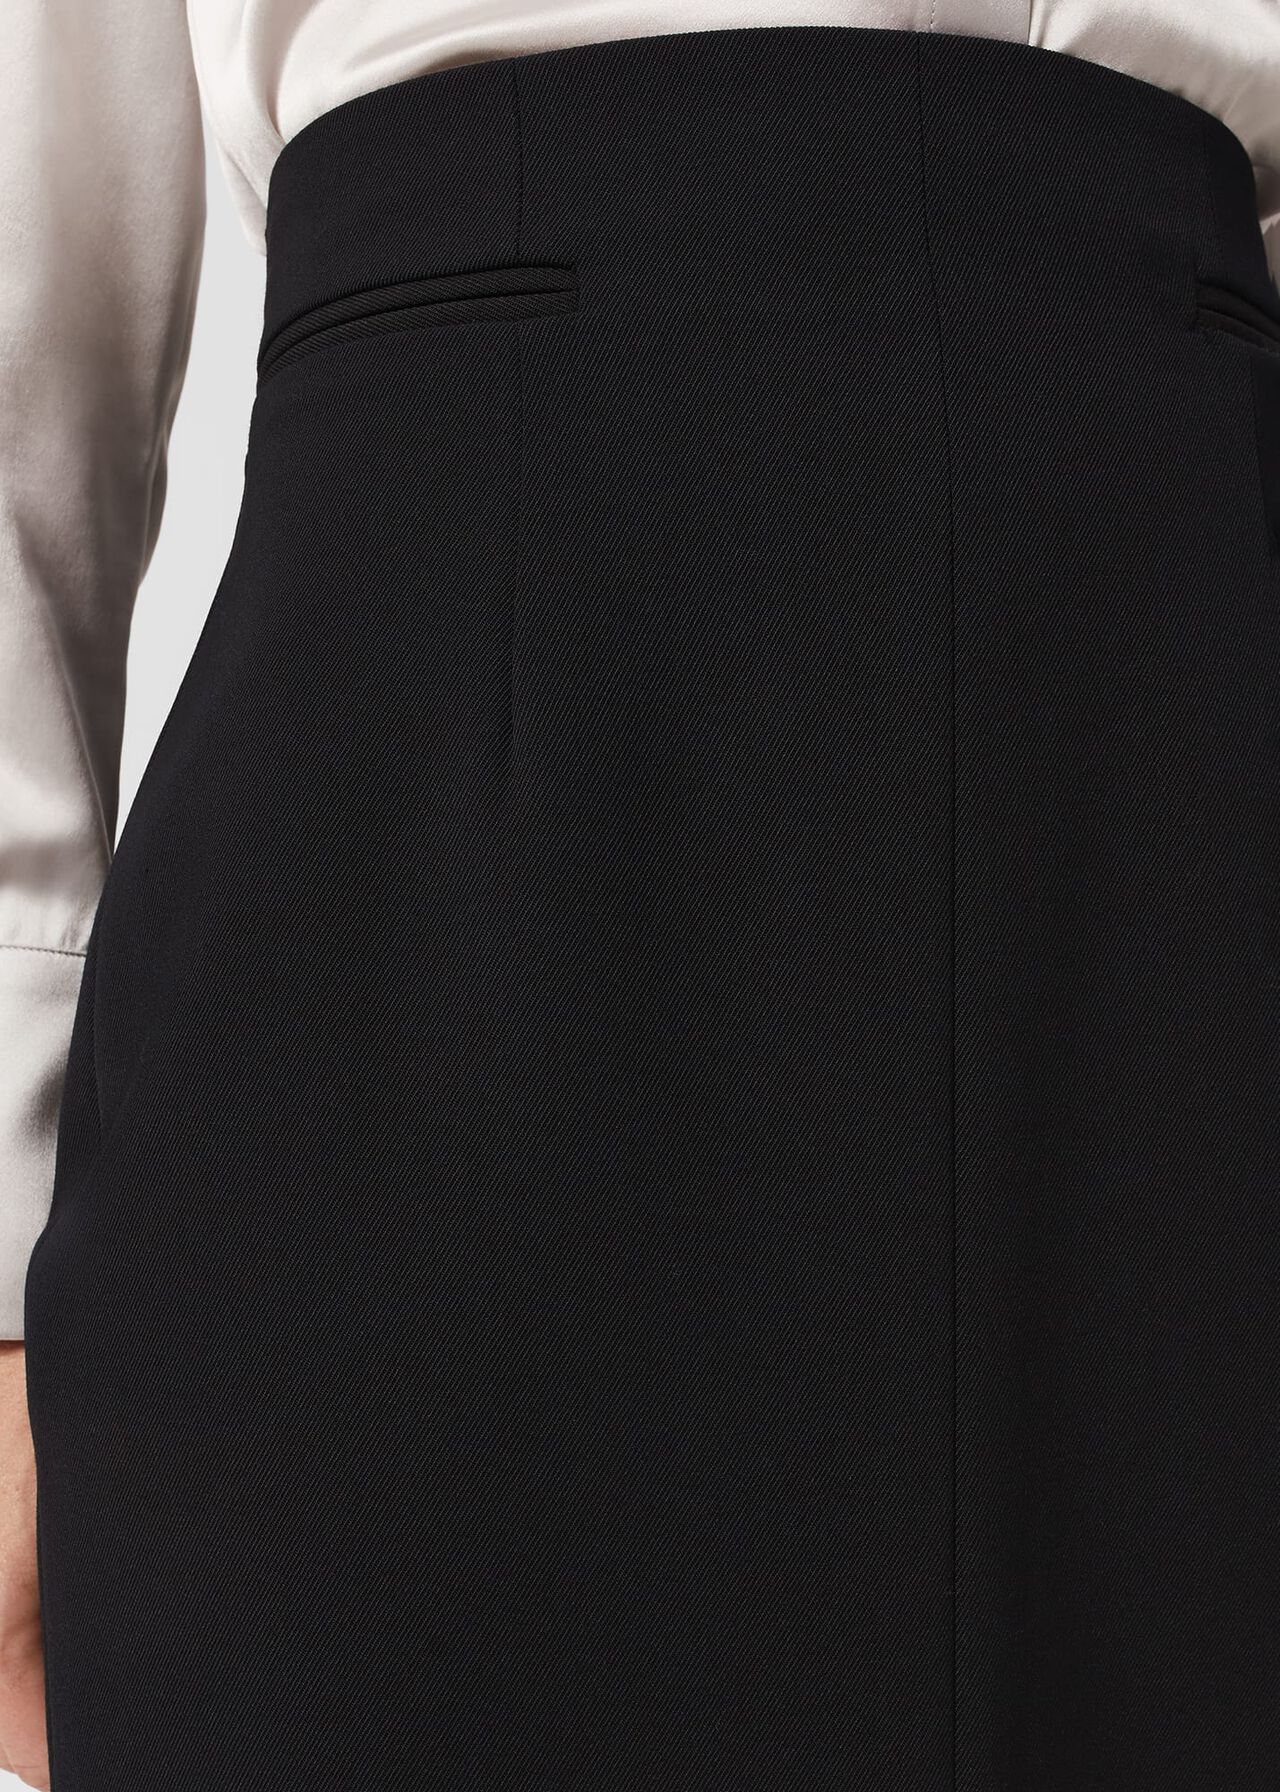 Clarice Skirt, Black, hi-res